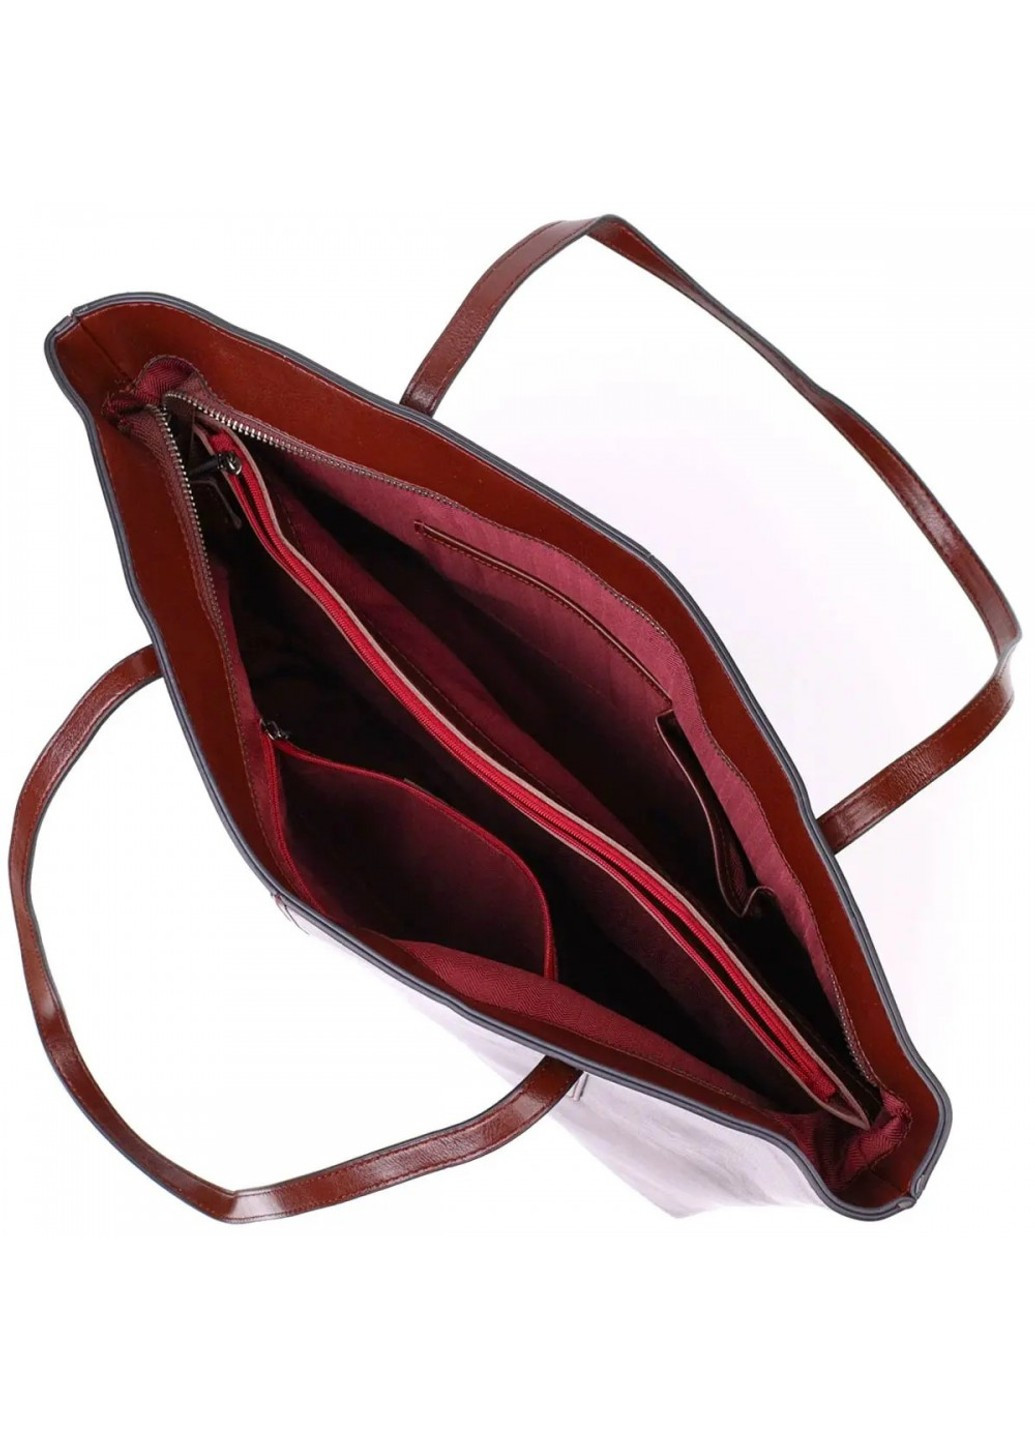 Женская кожаная сумка шоппер 22103 Vintage (262523839)